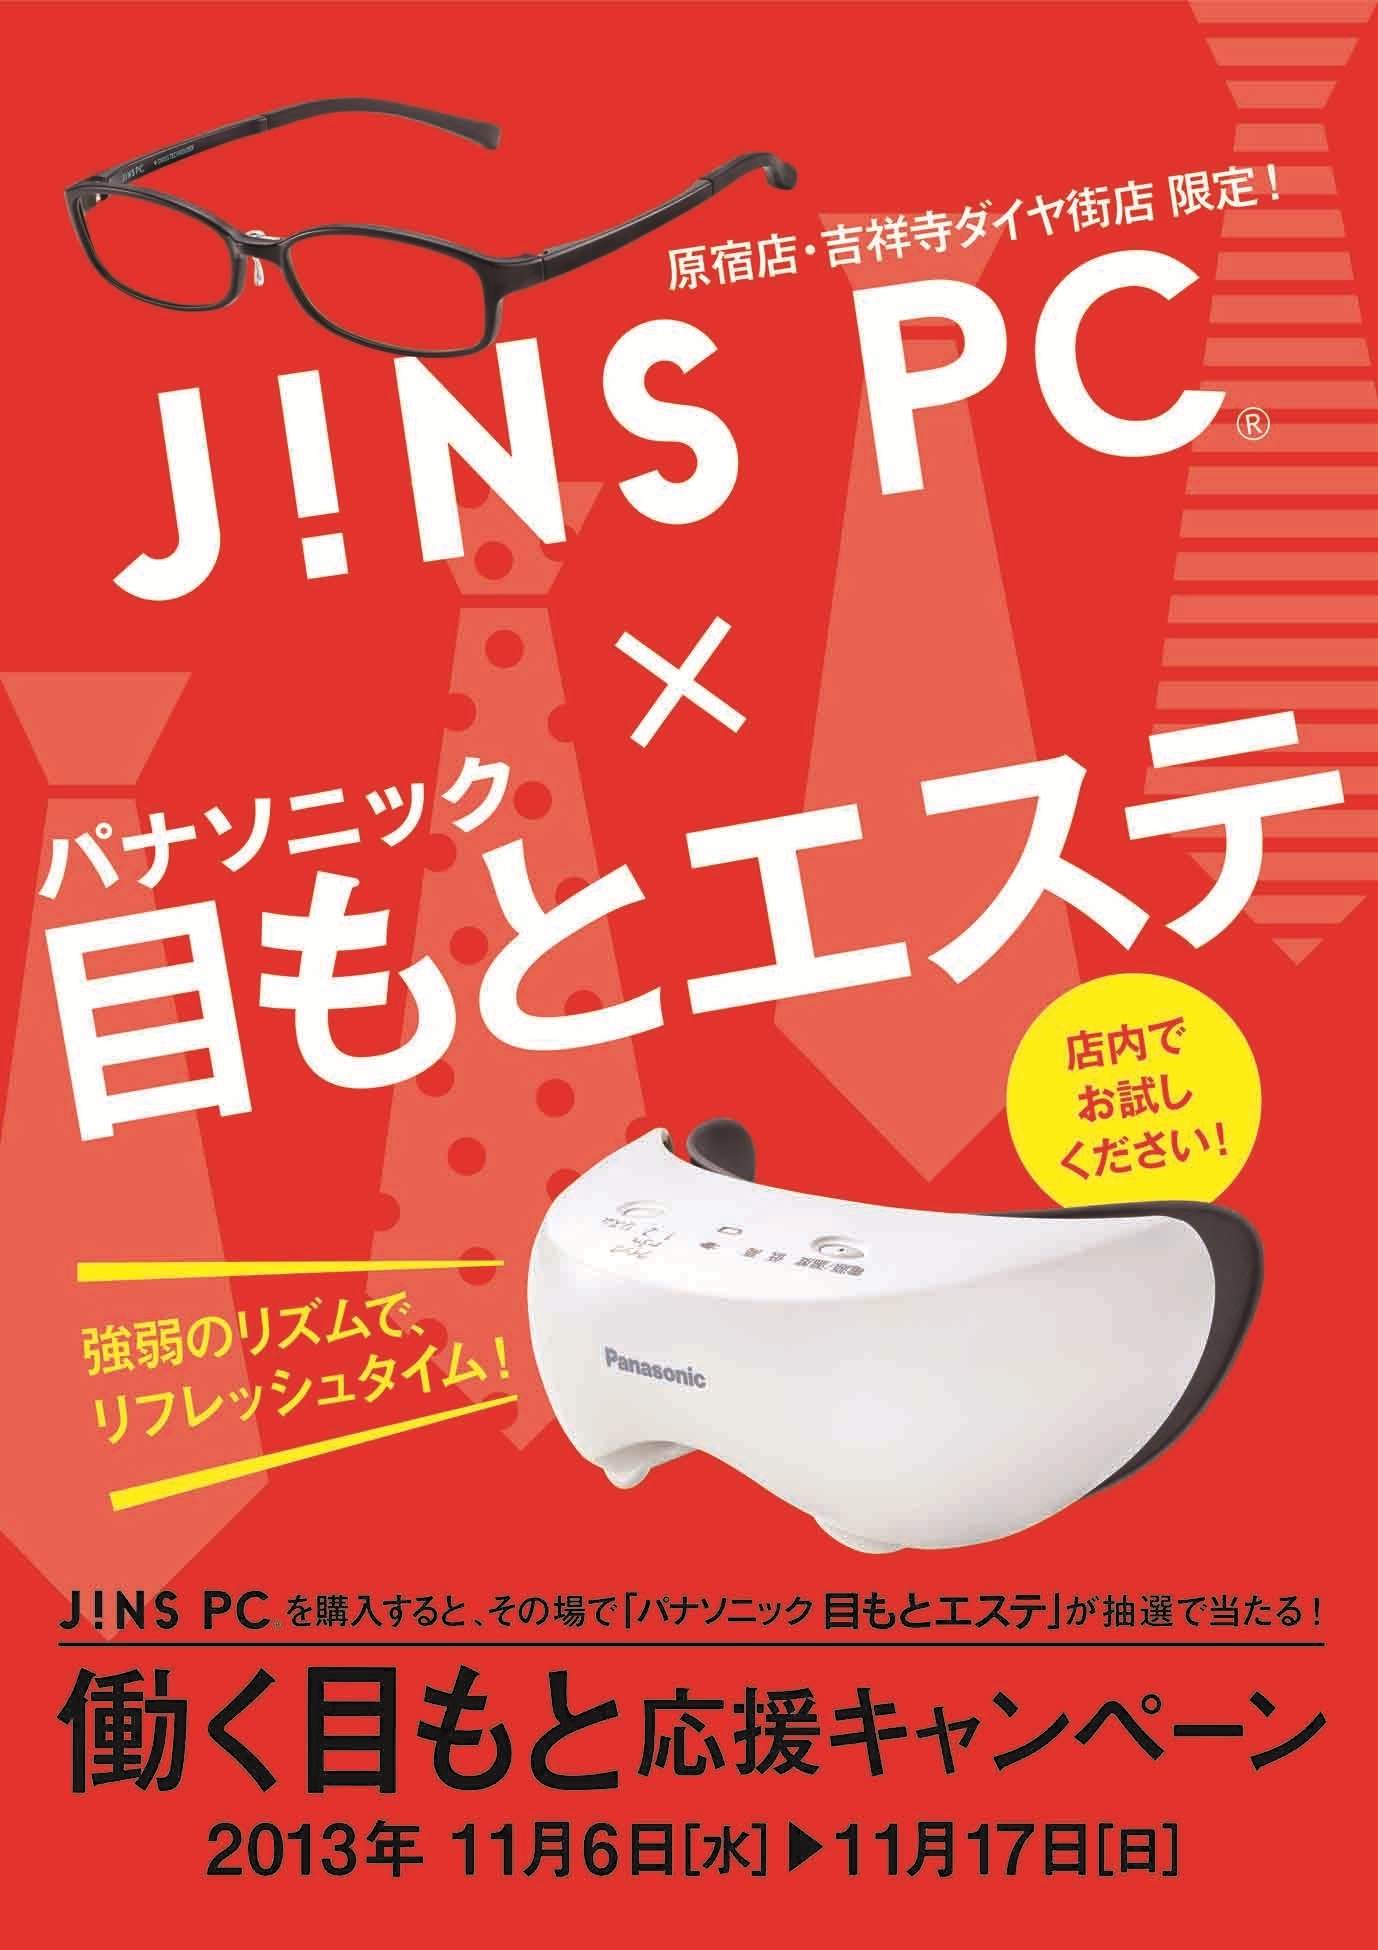 「JINS PC×パナソニック 目もとエステ」初のコラボ企画！